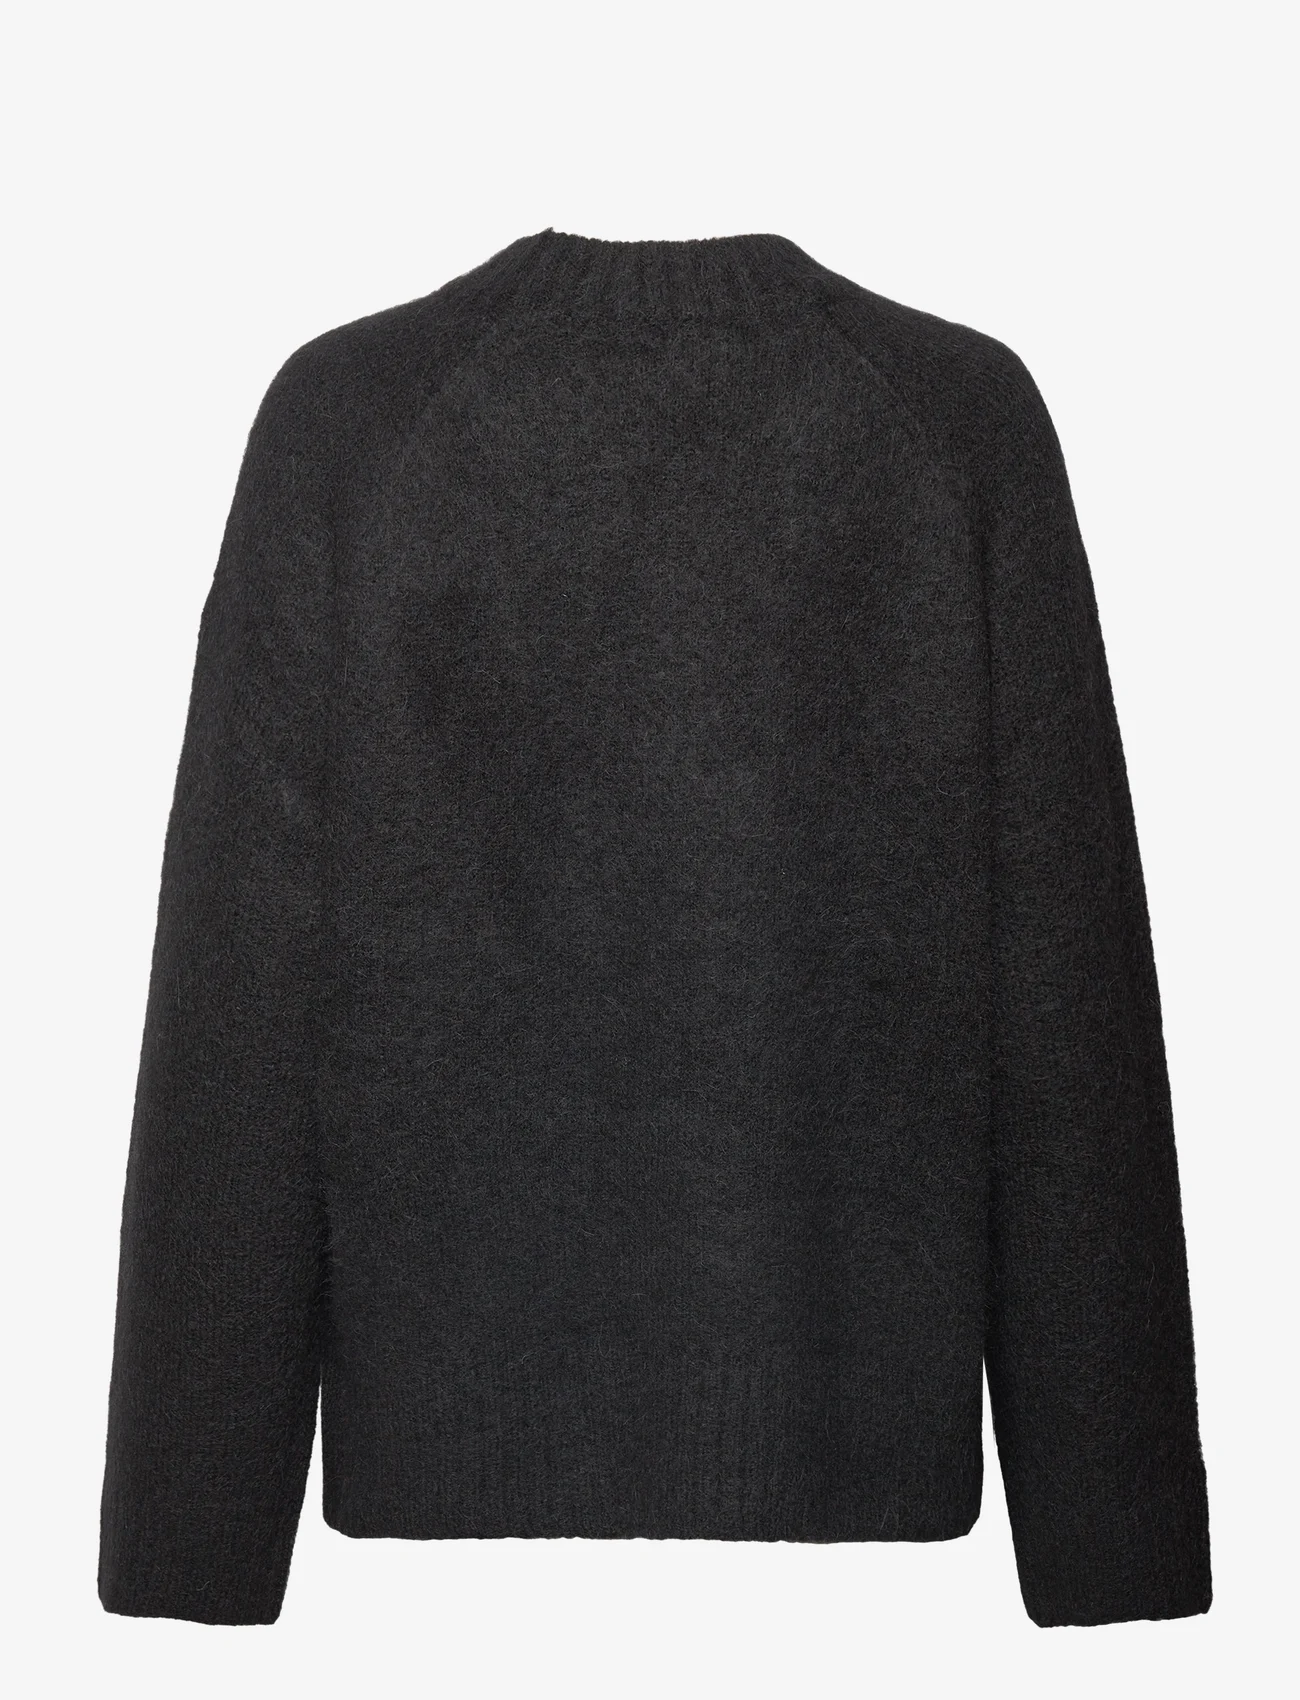 HOLZWEILER - Fure Fluffy Knit Sweater - džemperi - black - 1